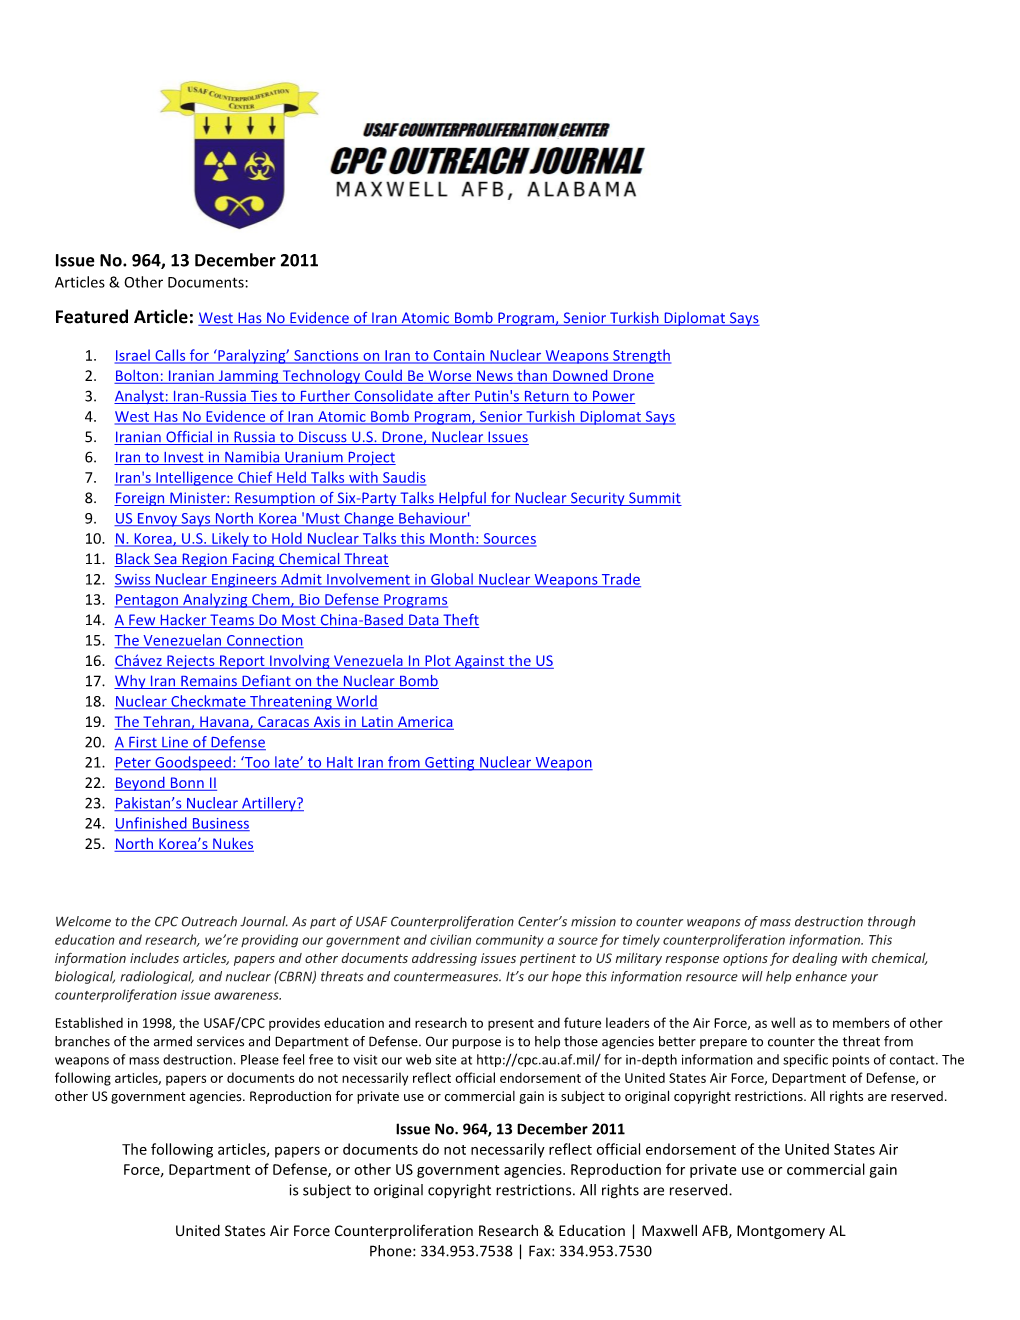 USAF Counterproliferation Center CPC Outreach Journal #964